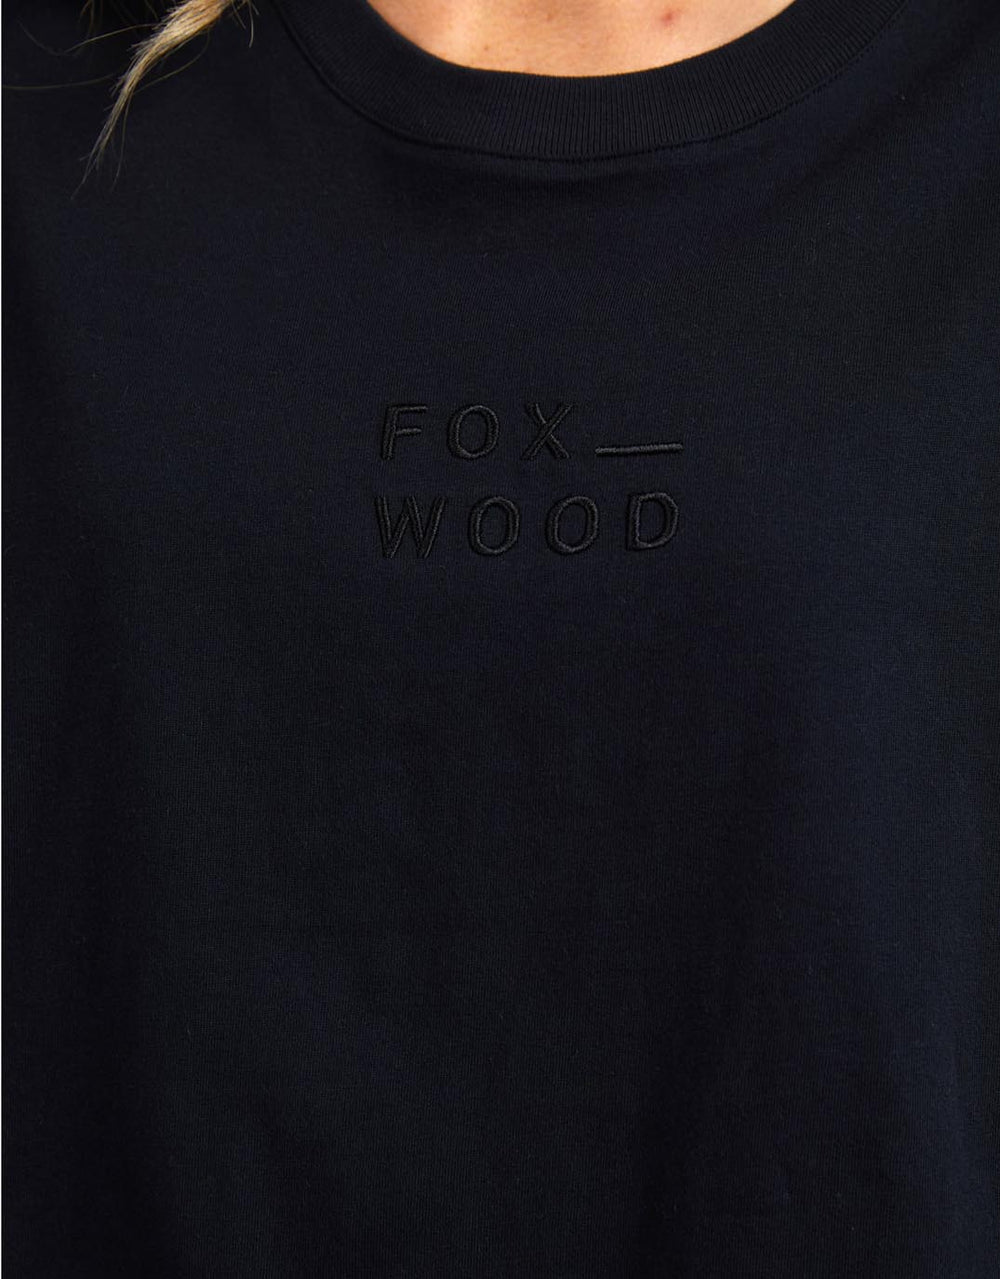 foxwood-huntleigh-oversized-tee-black-womens-clothing